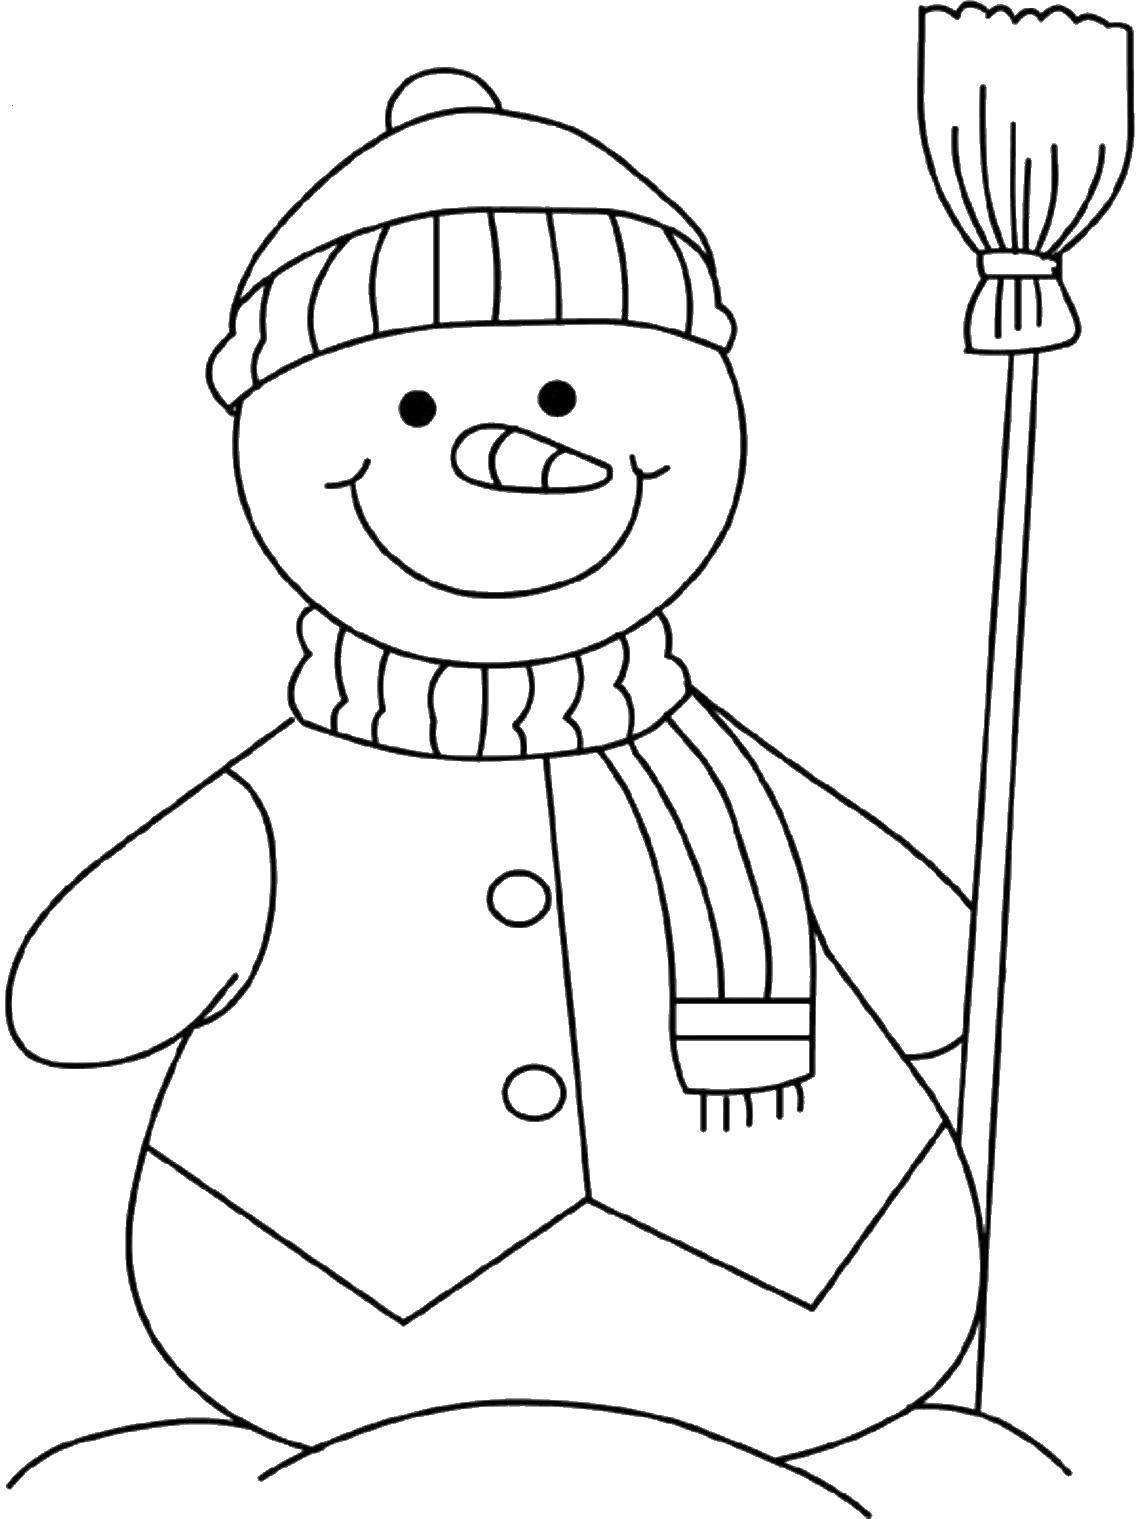 Название: Раскраска Снеговик с метлой. Категория: снеговик. Теги: снеговики, зима, снег.